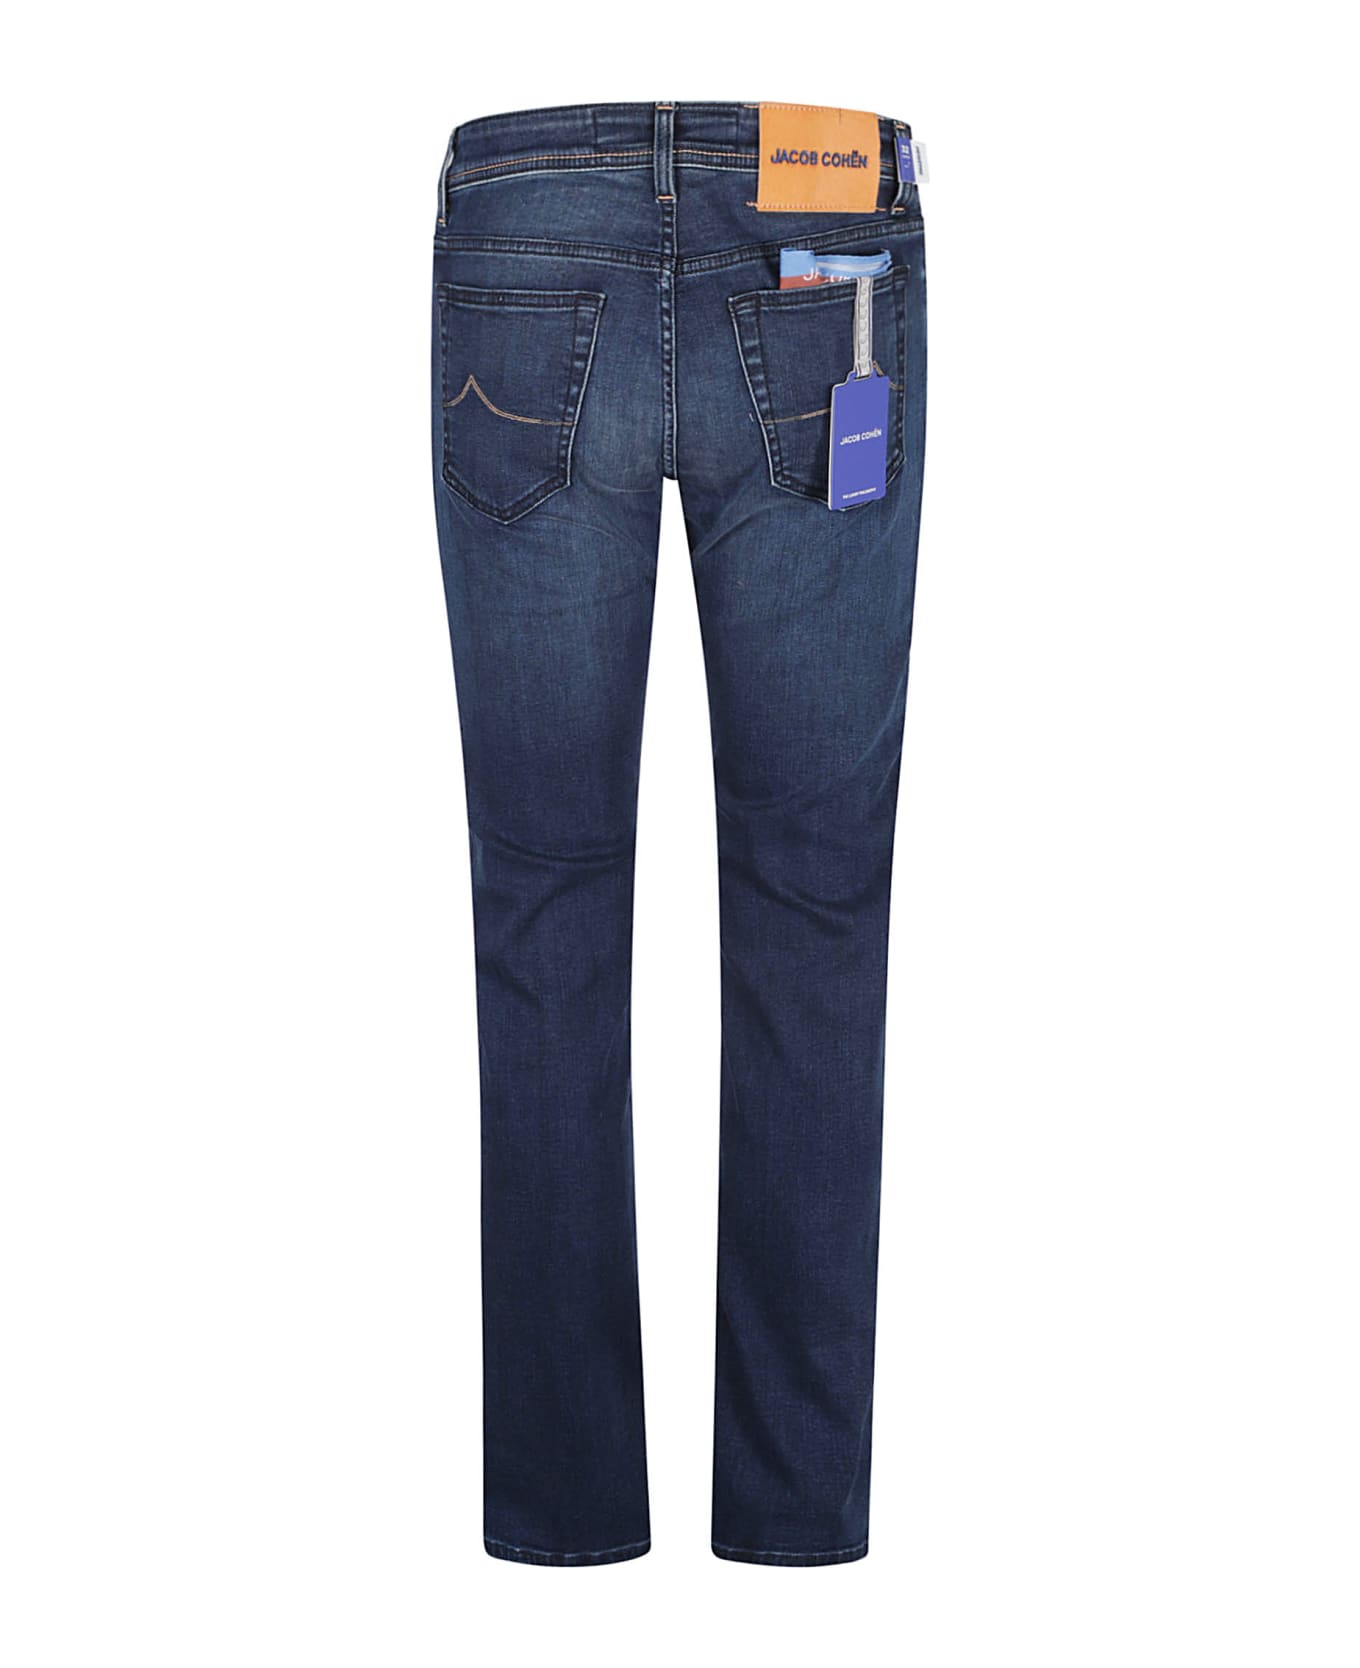 Jacob Cohen Skinny Fit Jeans - Denim